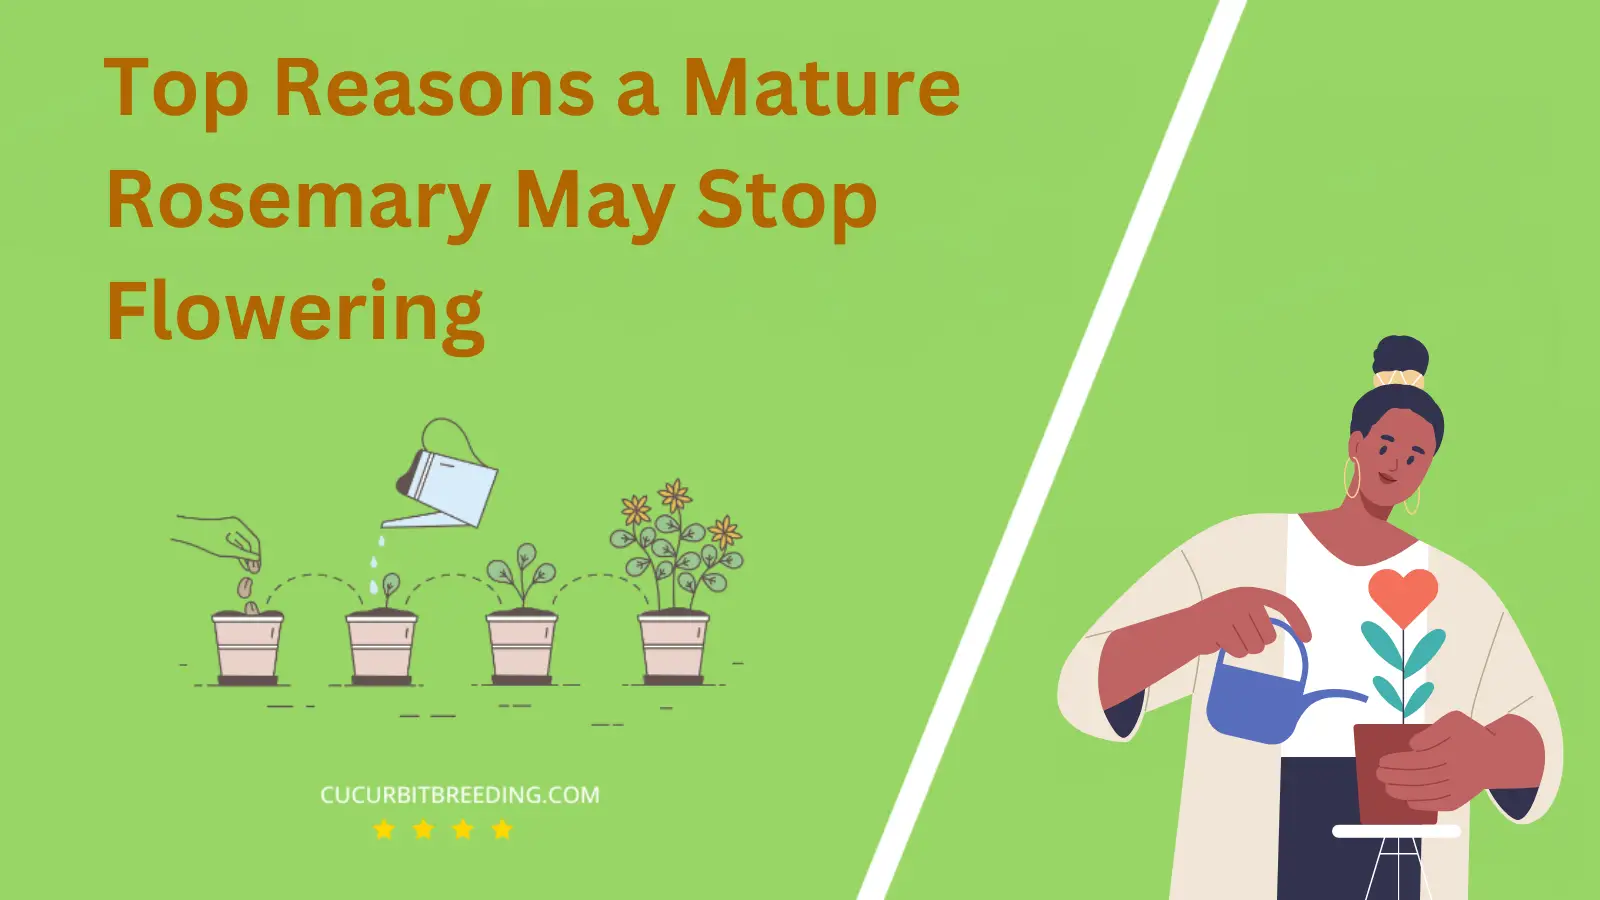 Top Reasons a Mature Rosemary May Stop Flowering